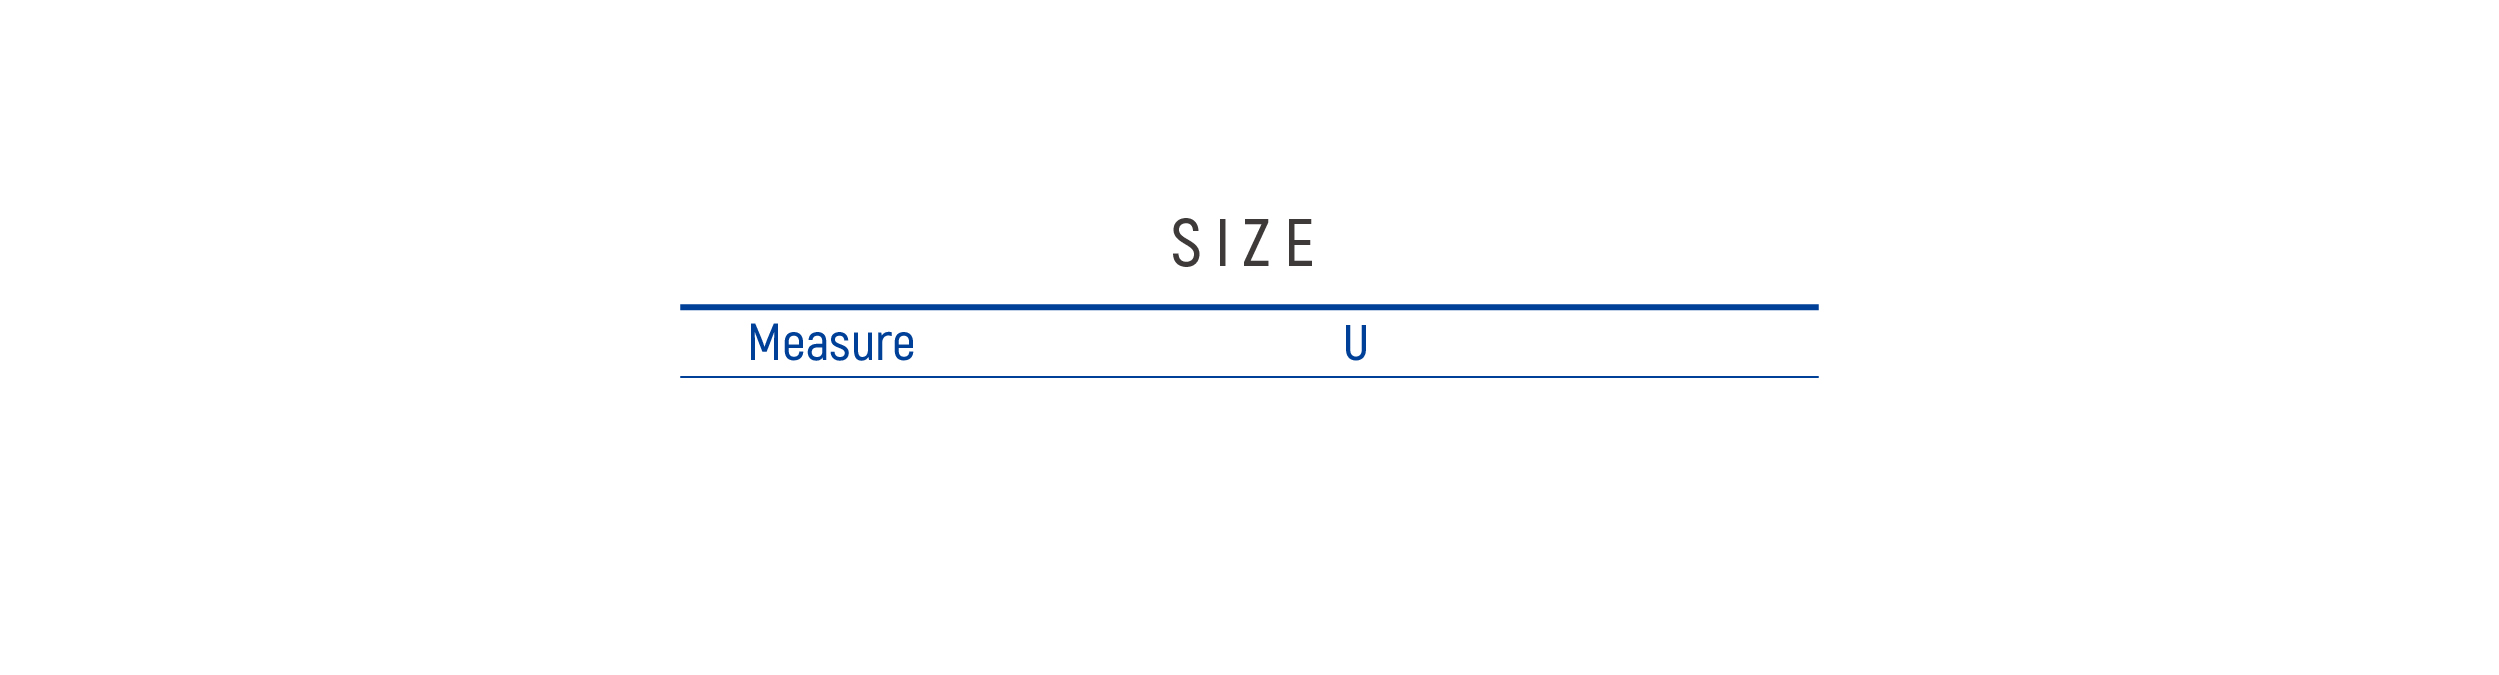 DR-E008 Size table image